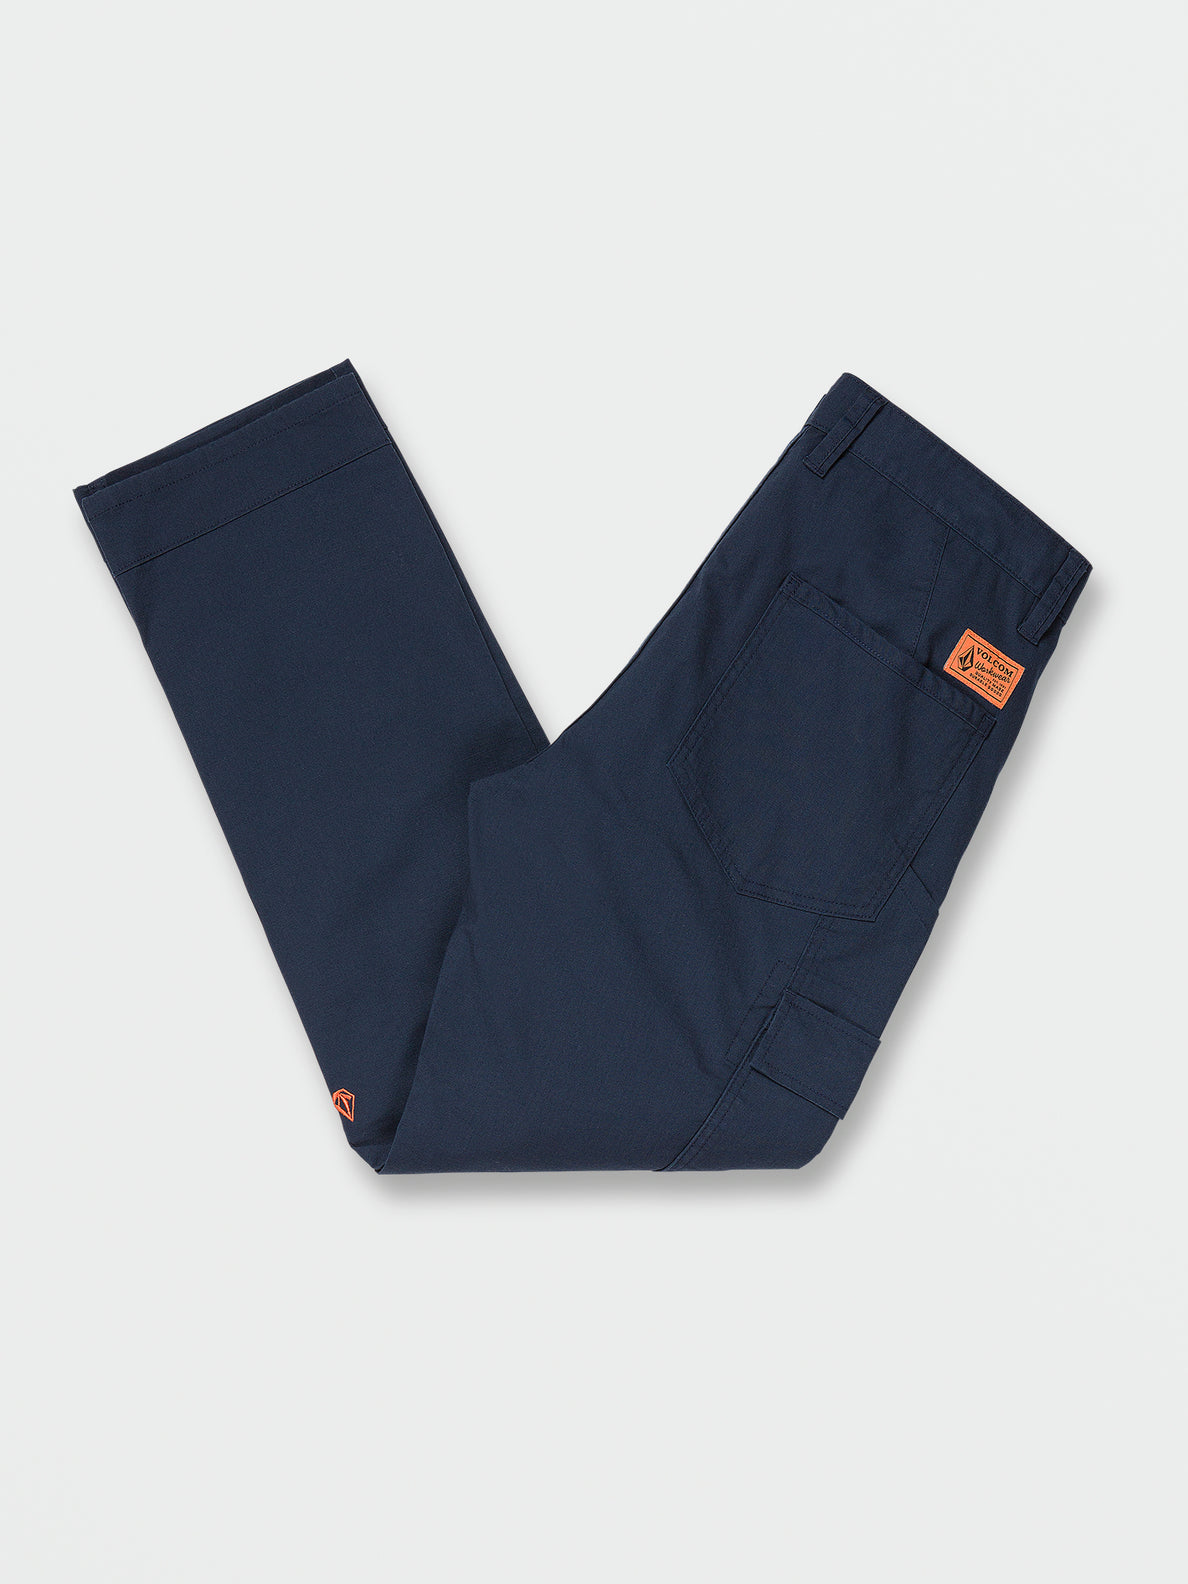 Navy Pants – Light - US Meter Work Volcom Volcom Workwear